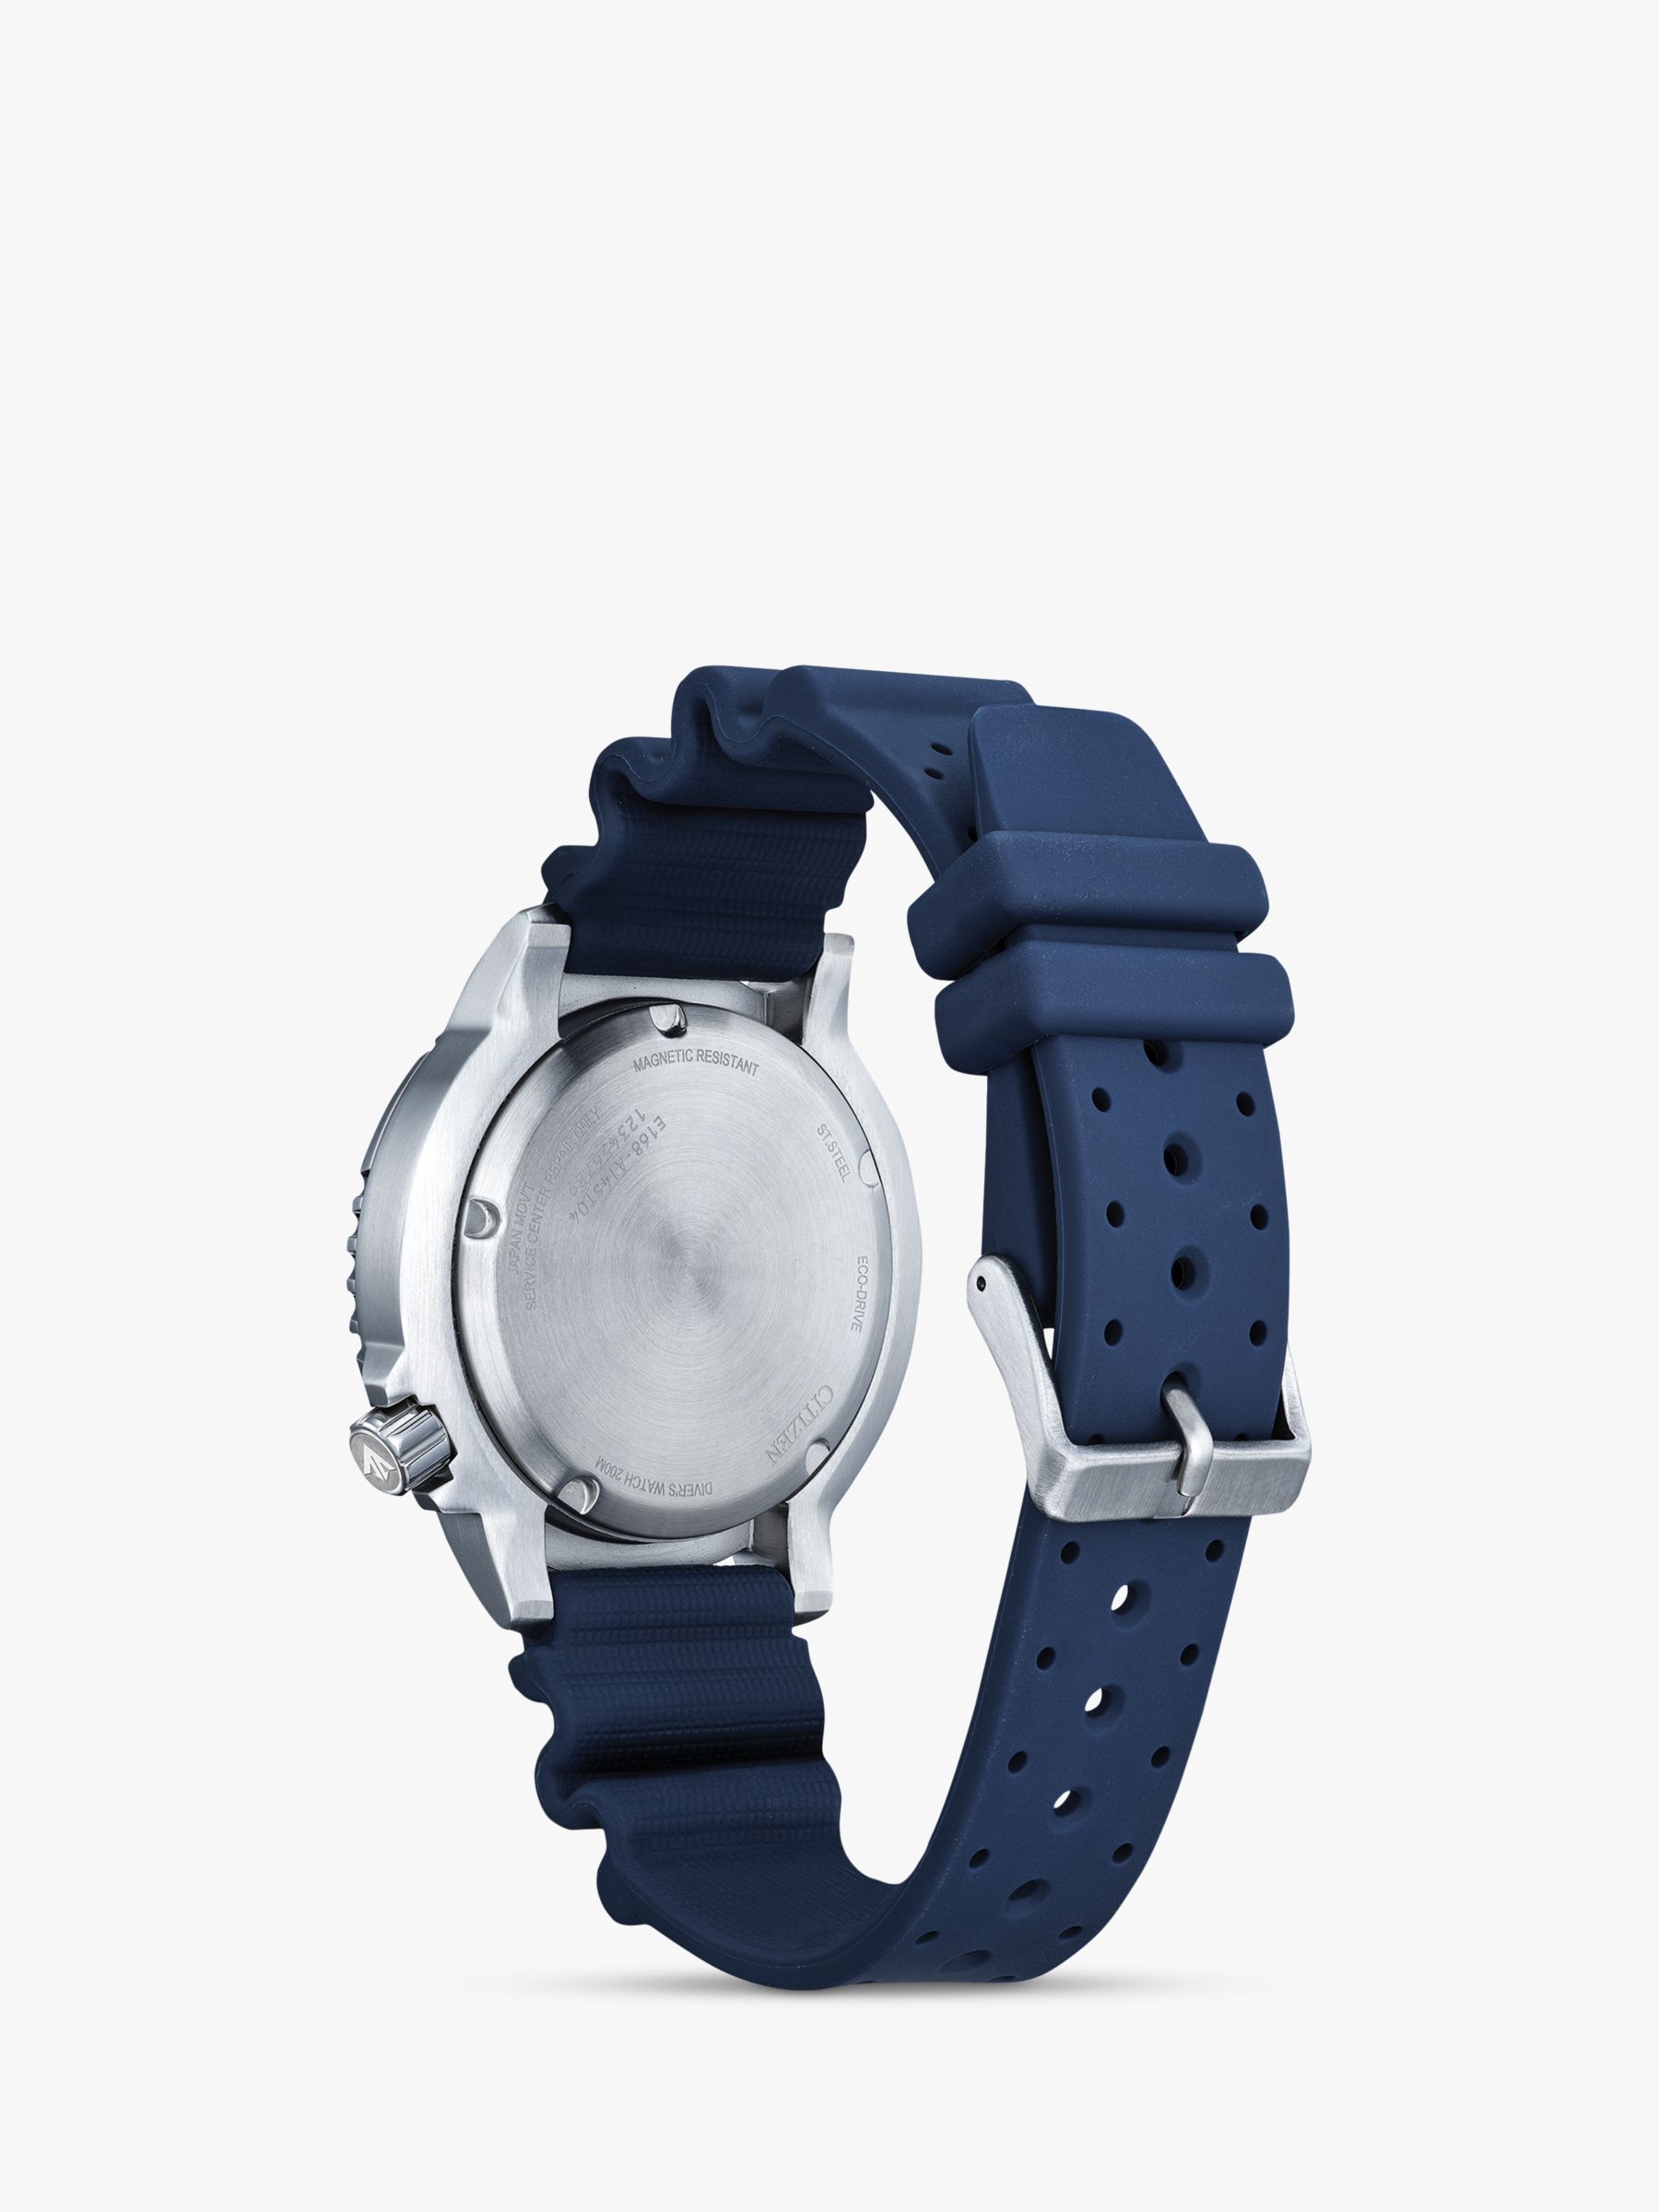 Citizen Men's Pro Master Diver Eco-Drive Date Band Strap Watch, Navy/Orange BN0169-03X